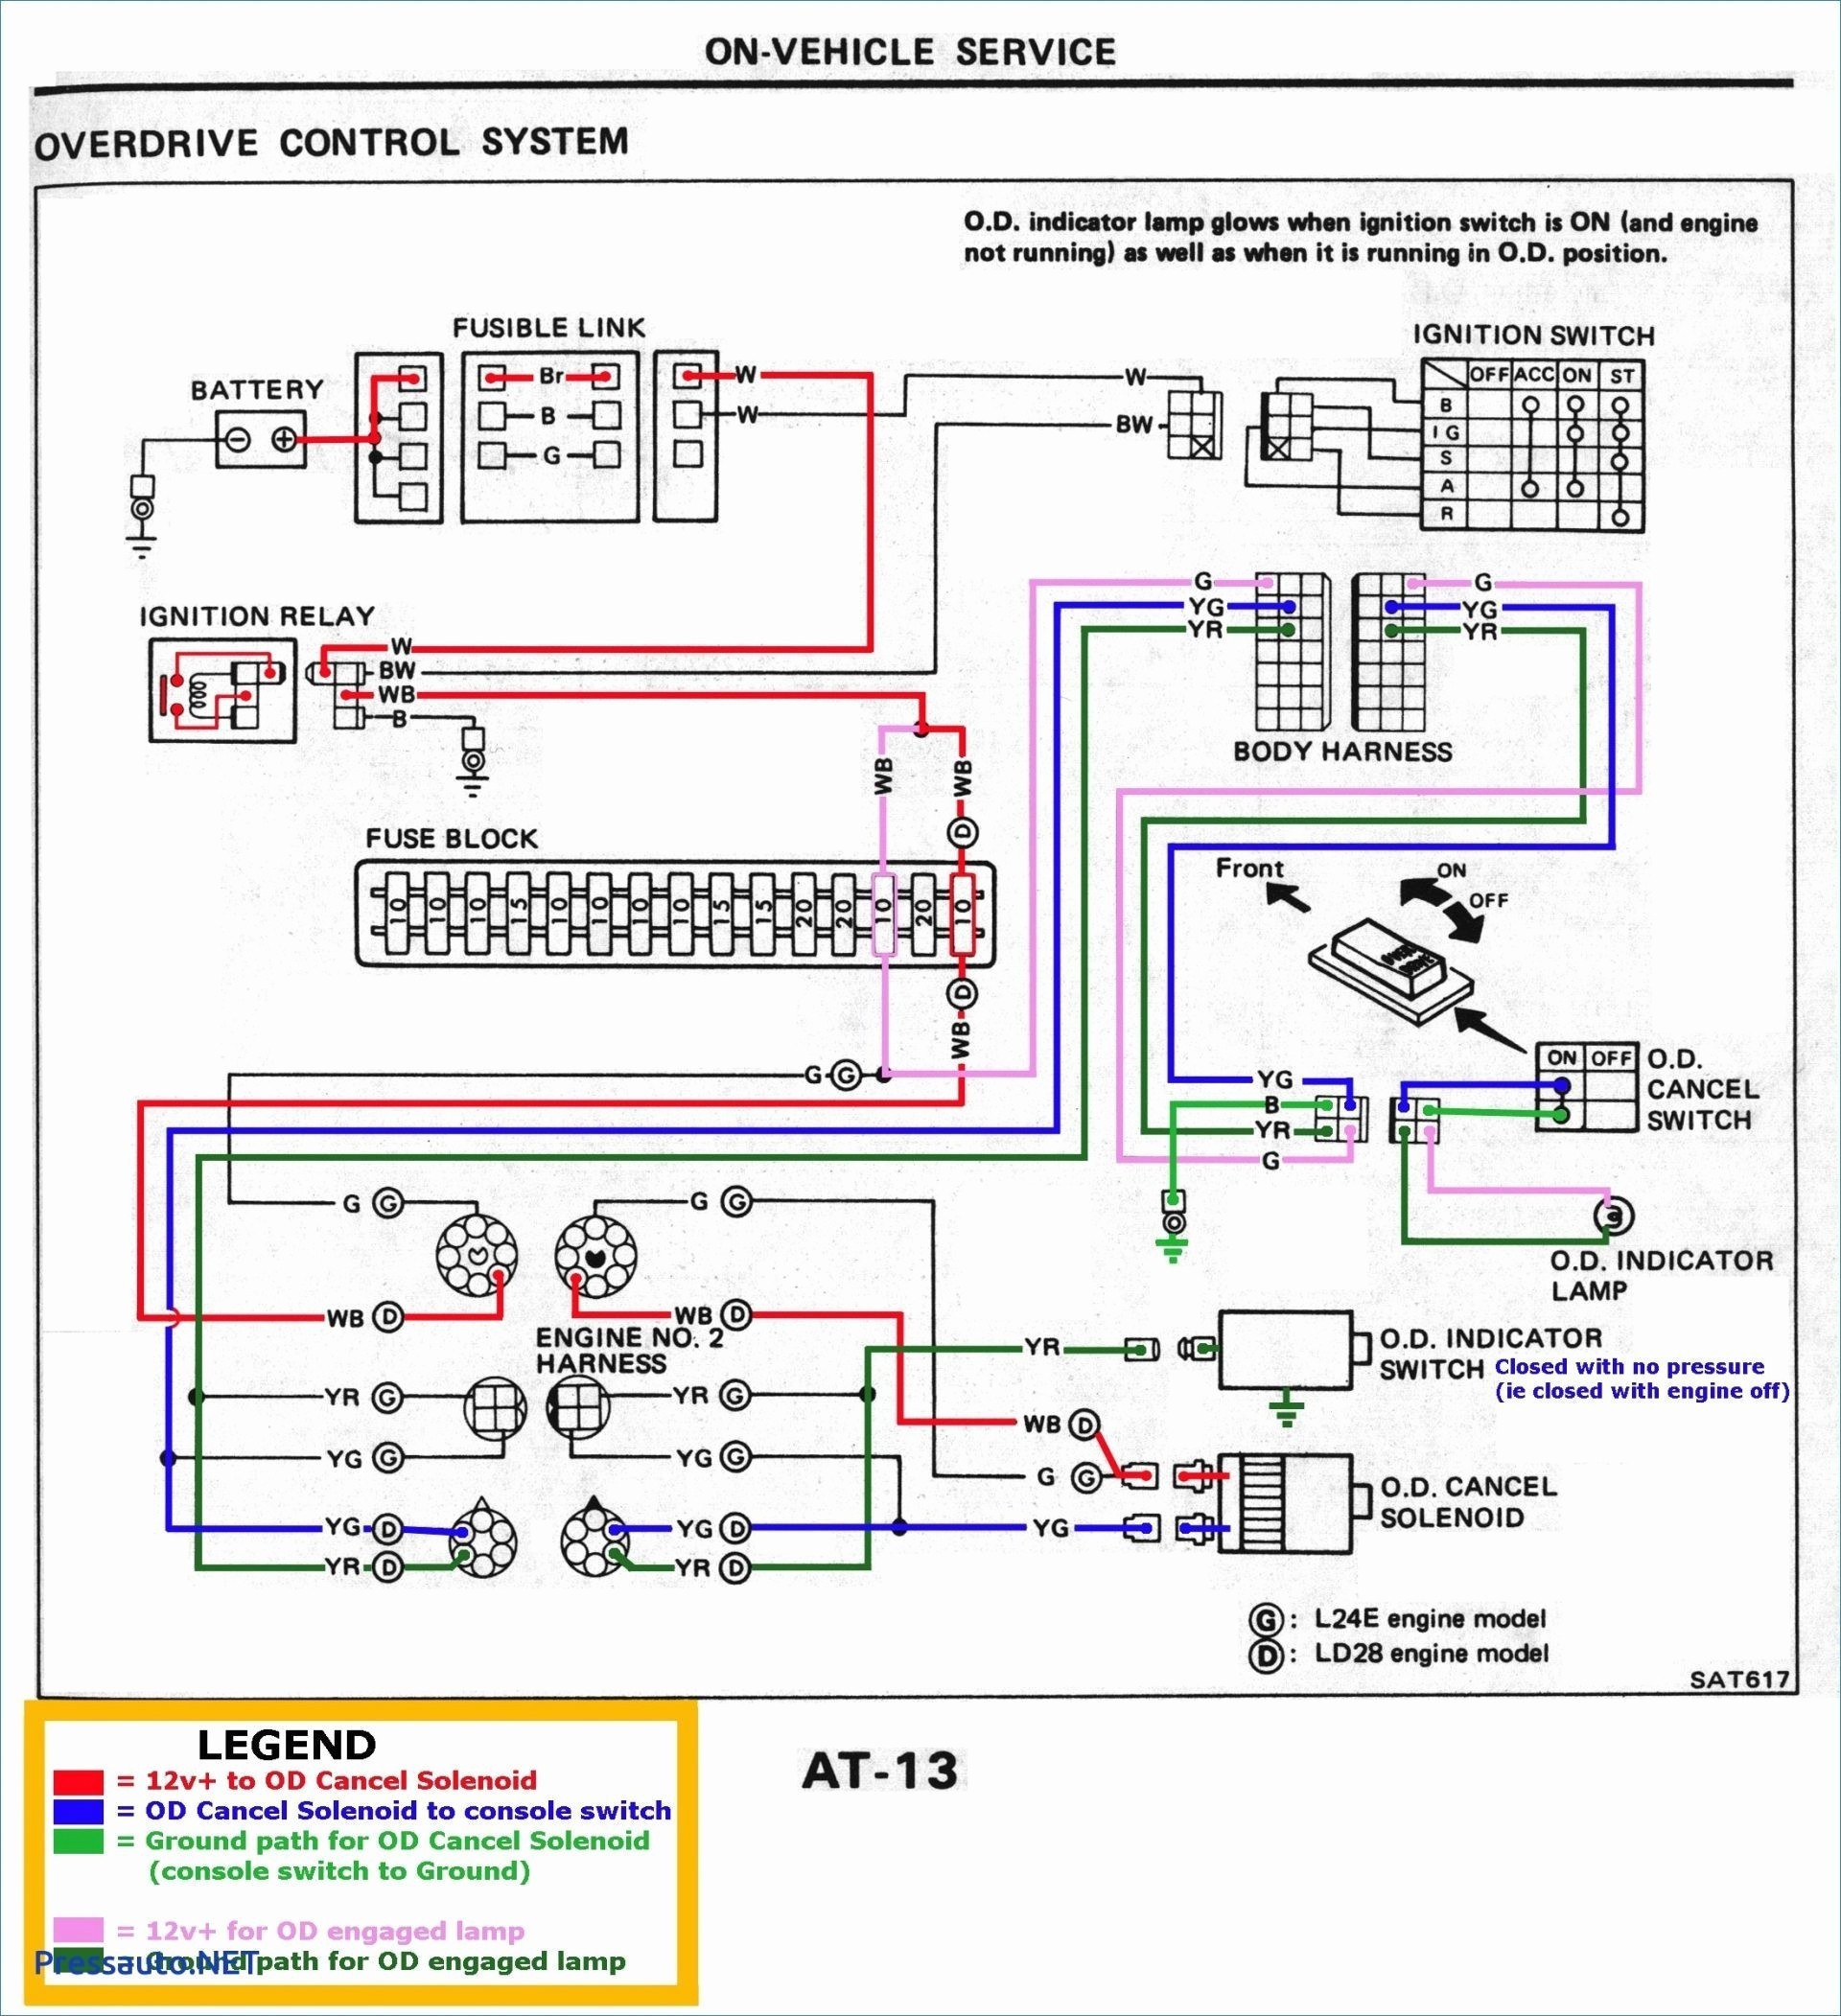 Generator Automatic Transfer Switch Wiring Diagram Reference Generator Changeover Switch Wiring Diagram Uk Fresh New Wiring